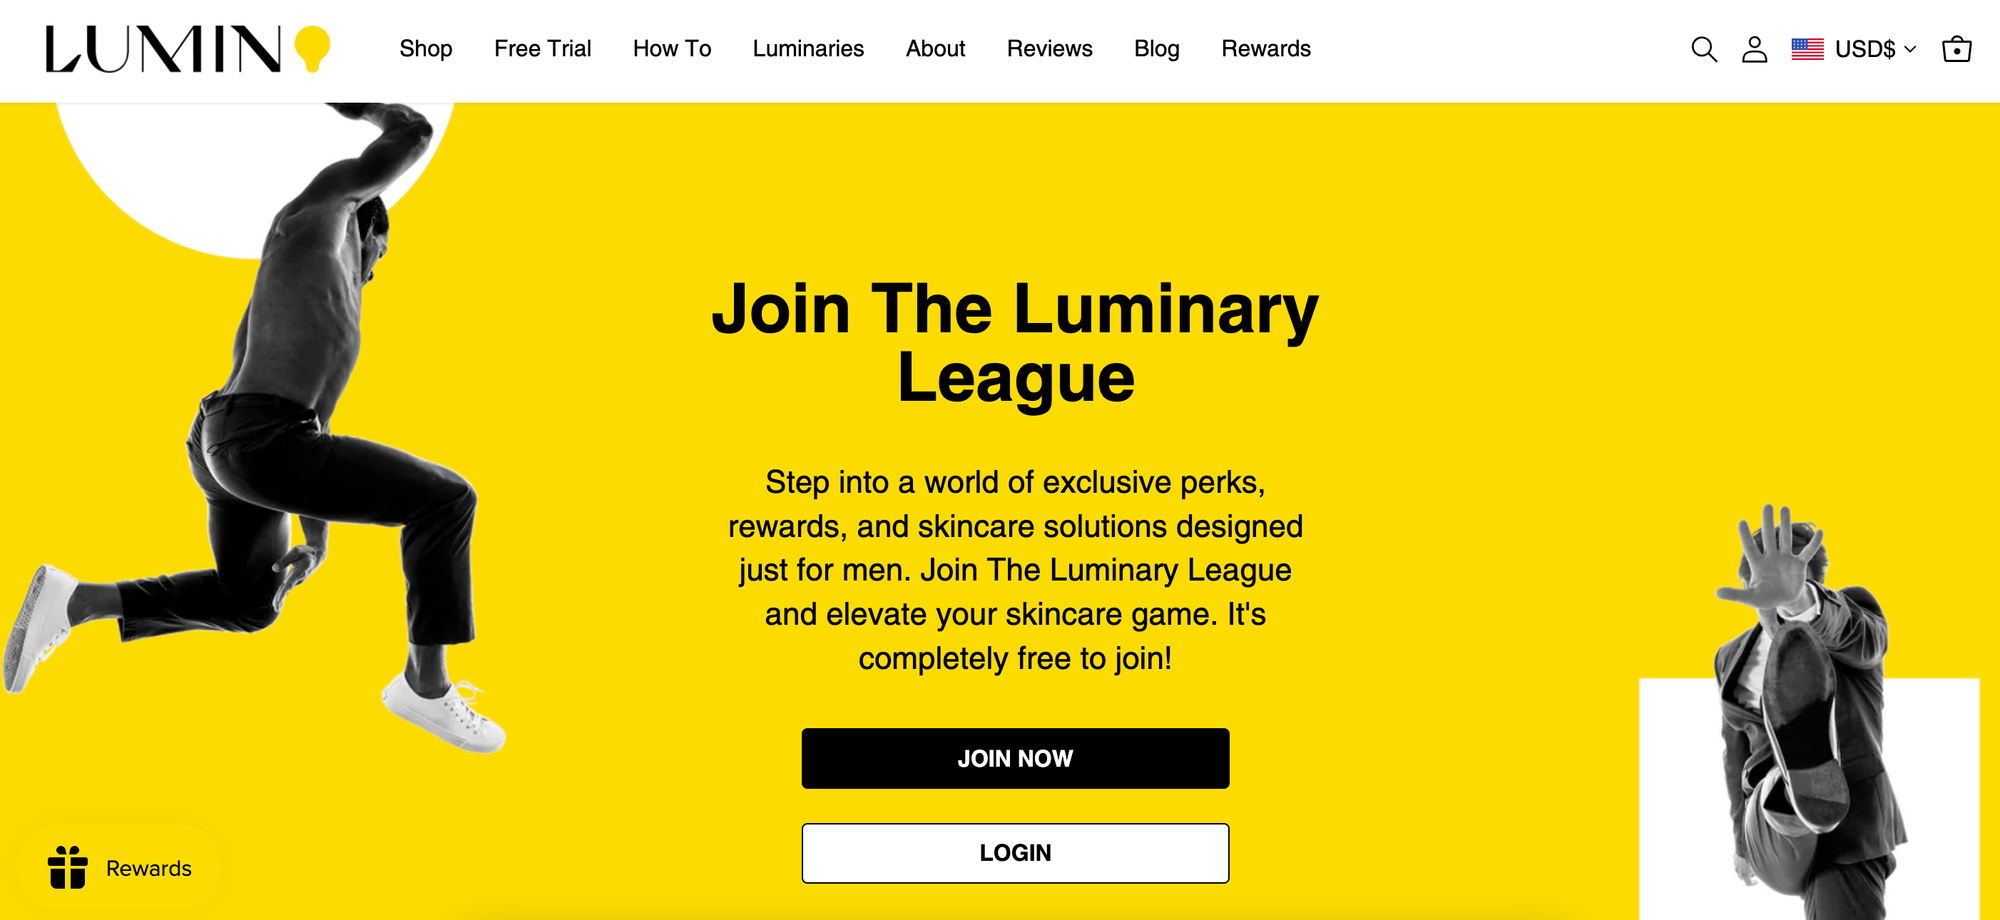 screenshot of ecommerce brand Lumin rewards page